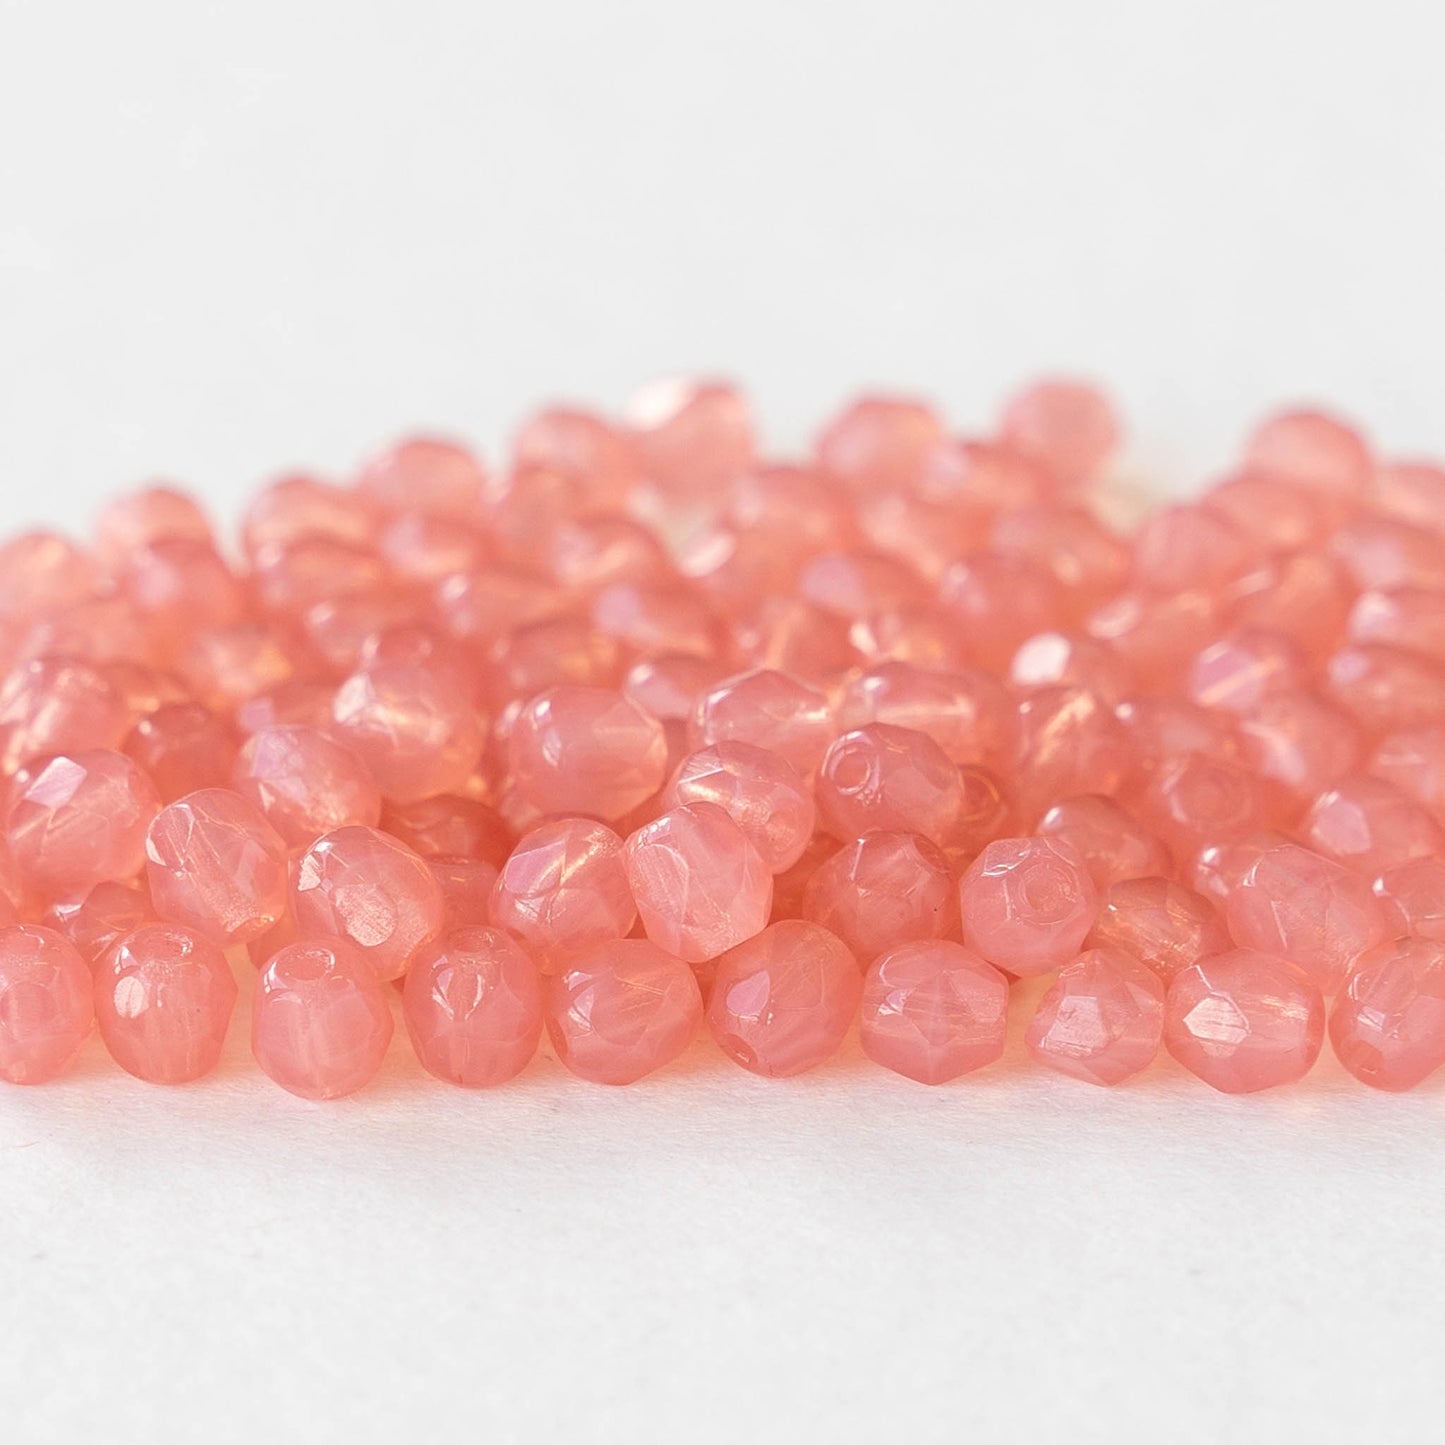 4mm Round Glass Beads - Opaline Rose - 100 Beads